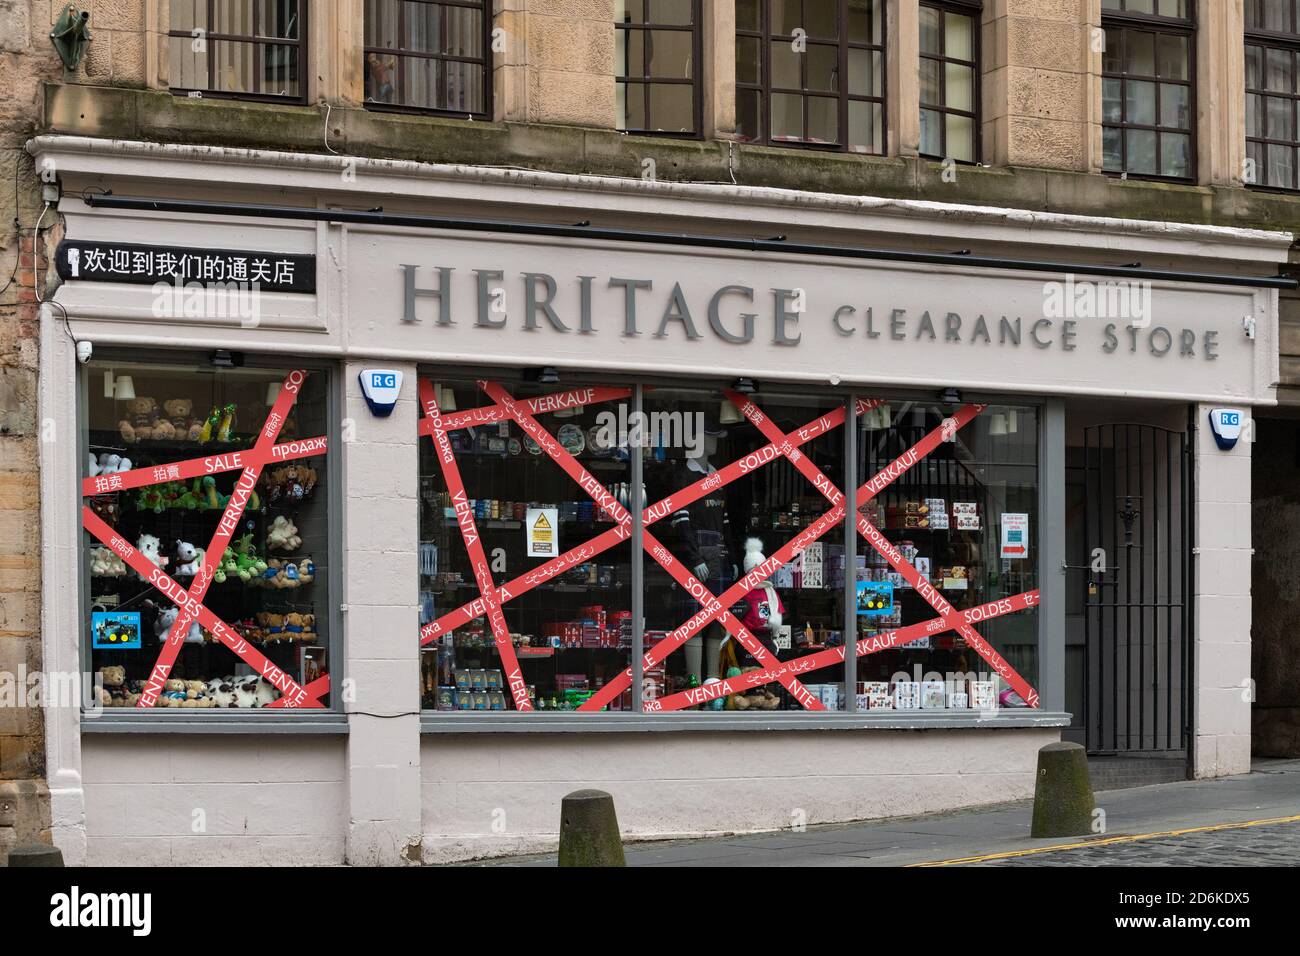 Señales de venta en diferentes idiomas durante la pandemia de coronavirus - Heritage Clearance Store, Edinburgh Royal Mile, Edinburgh, Scotland, UK Foto de stock